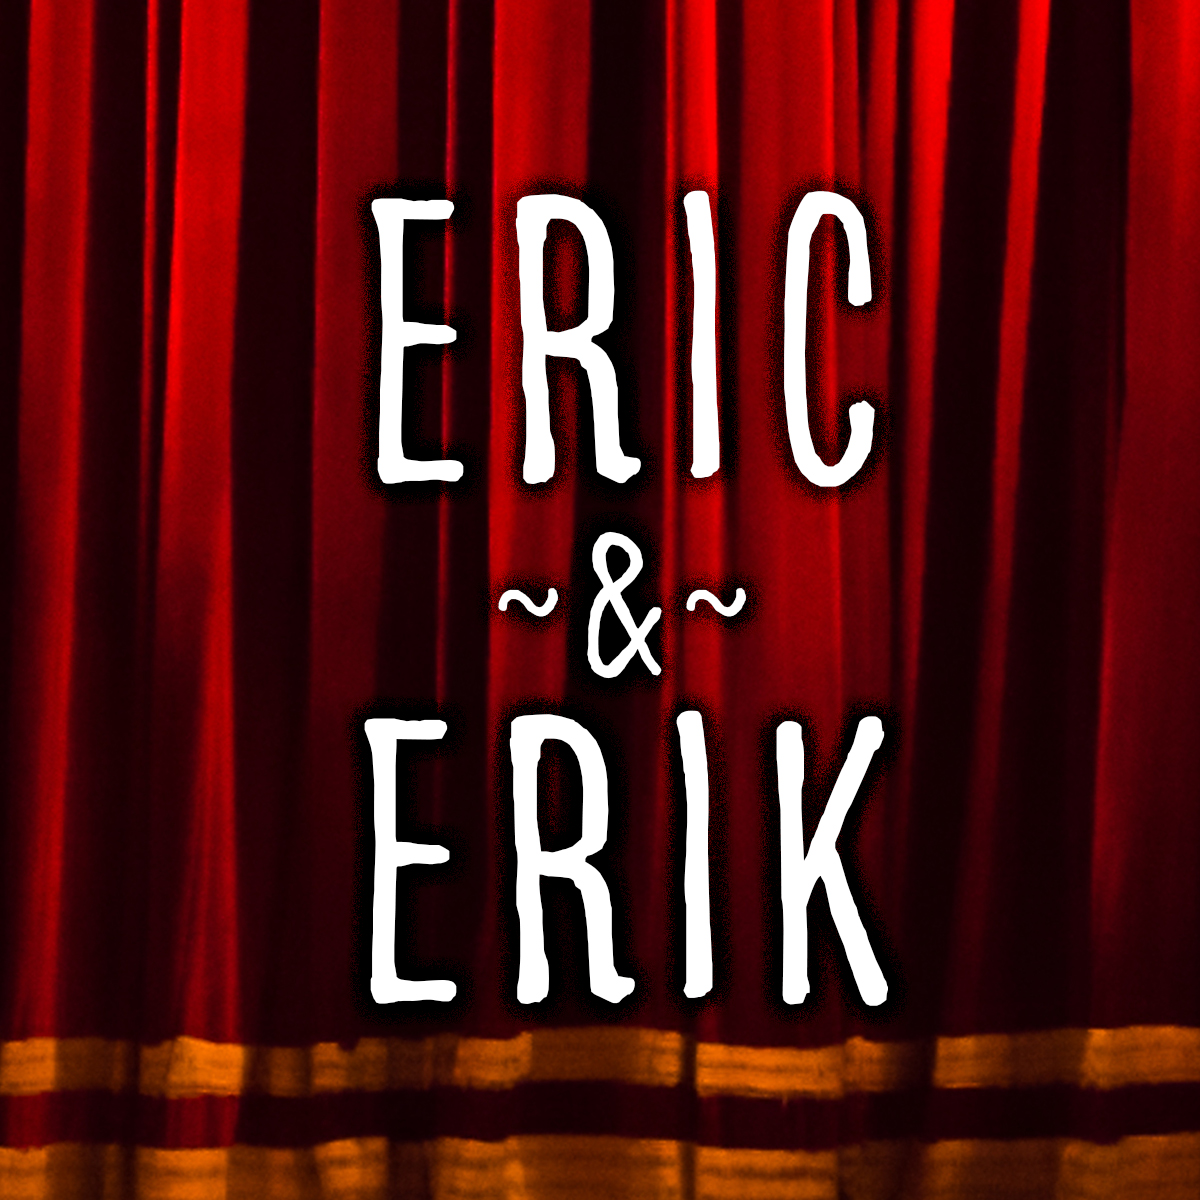 Eric & Erik Show